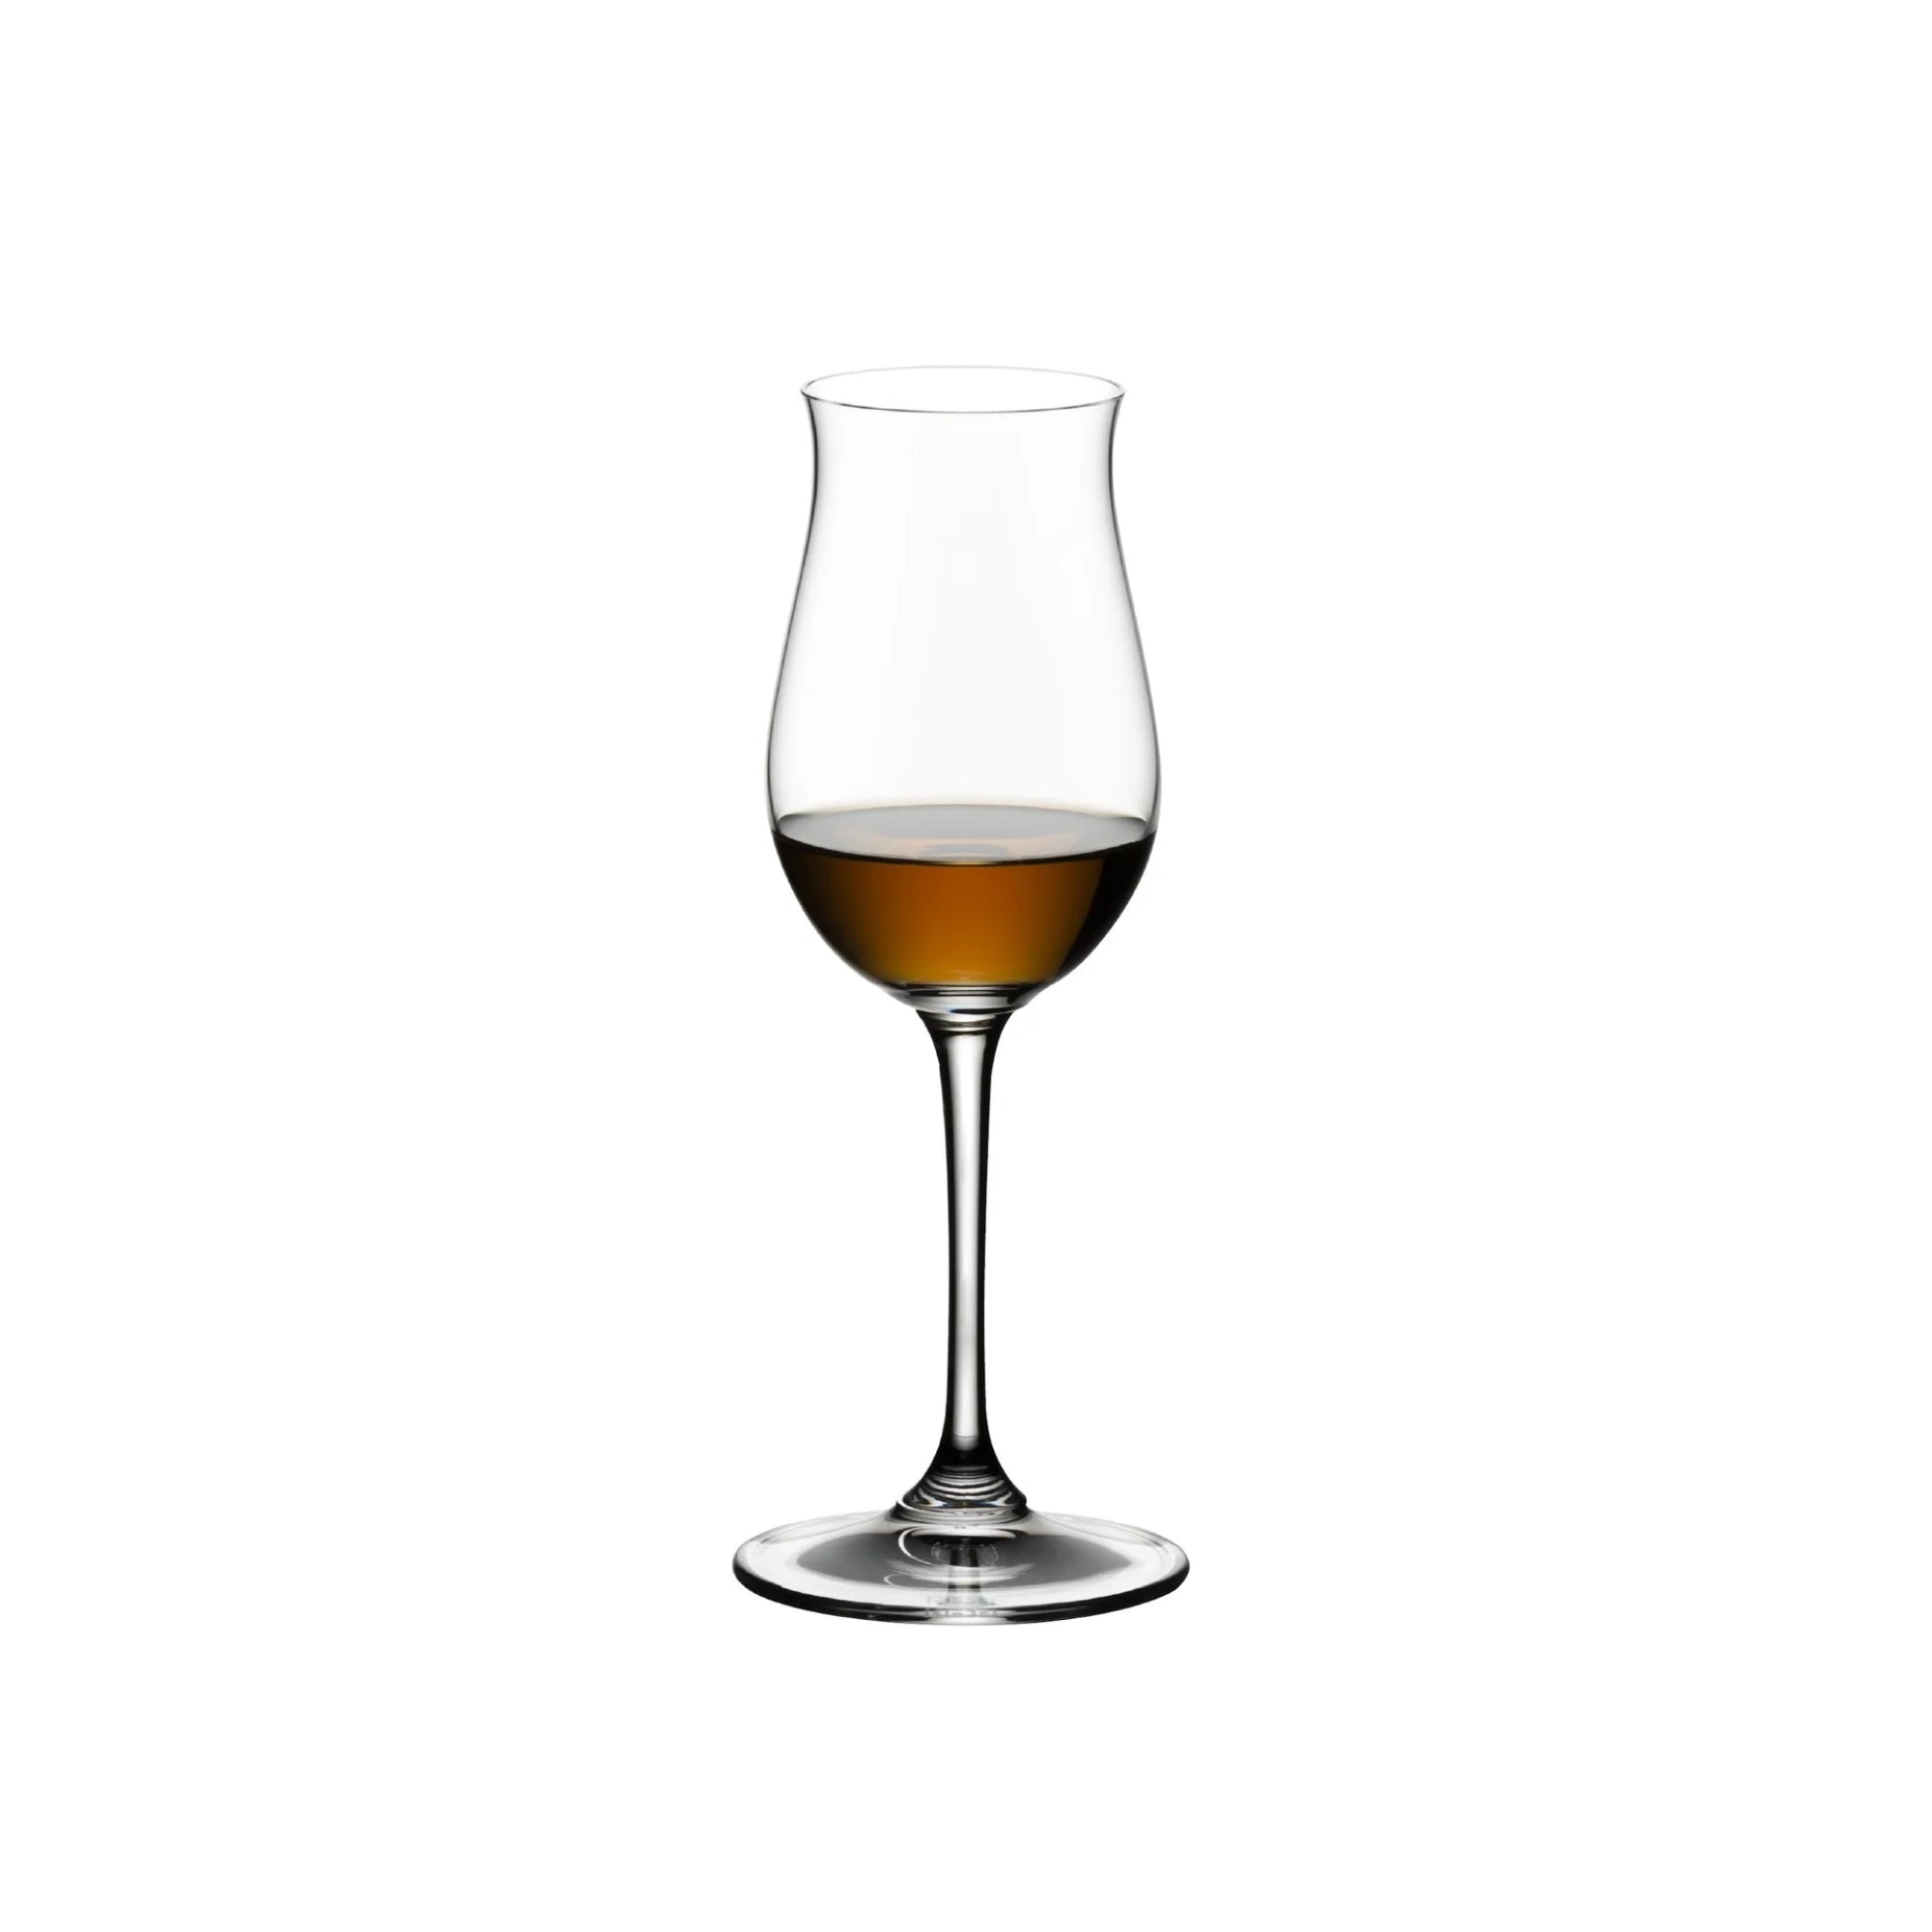 Riedel Vinum Cognac Hennessy Glasses, Set of 2 glasses